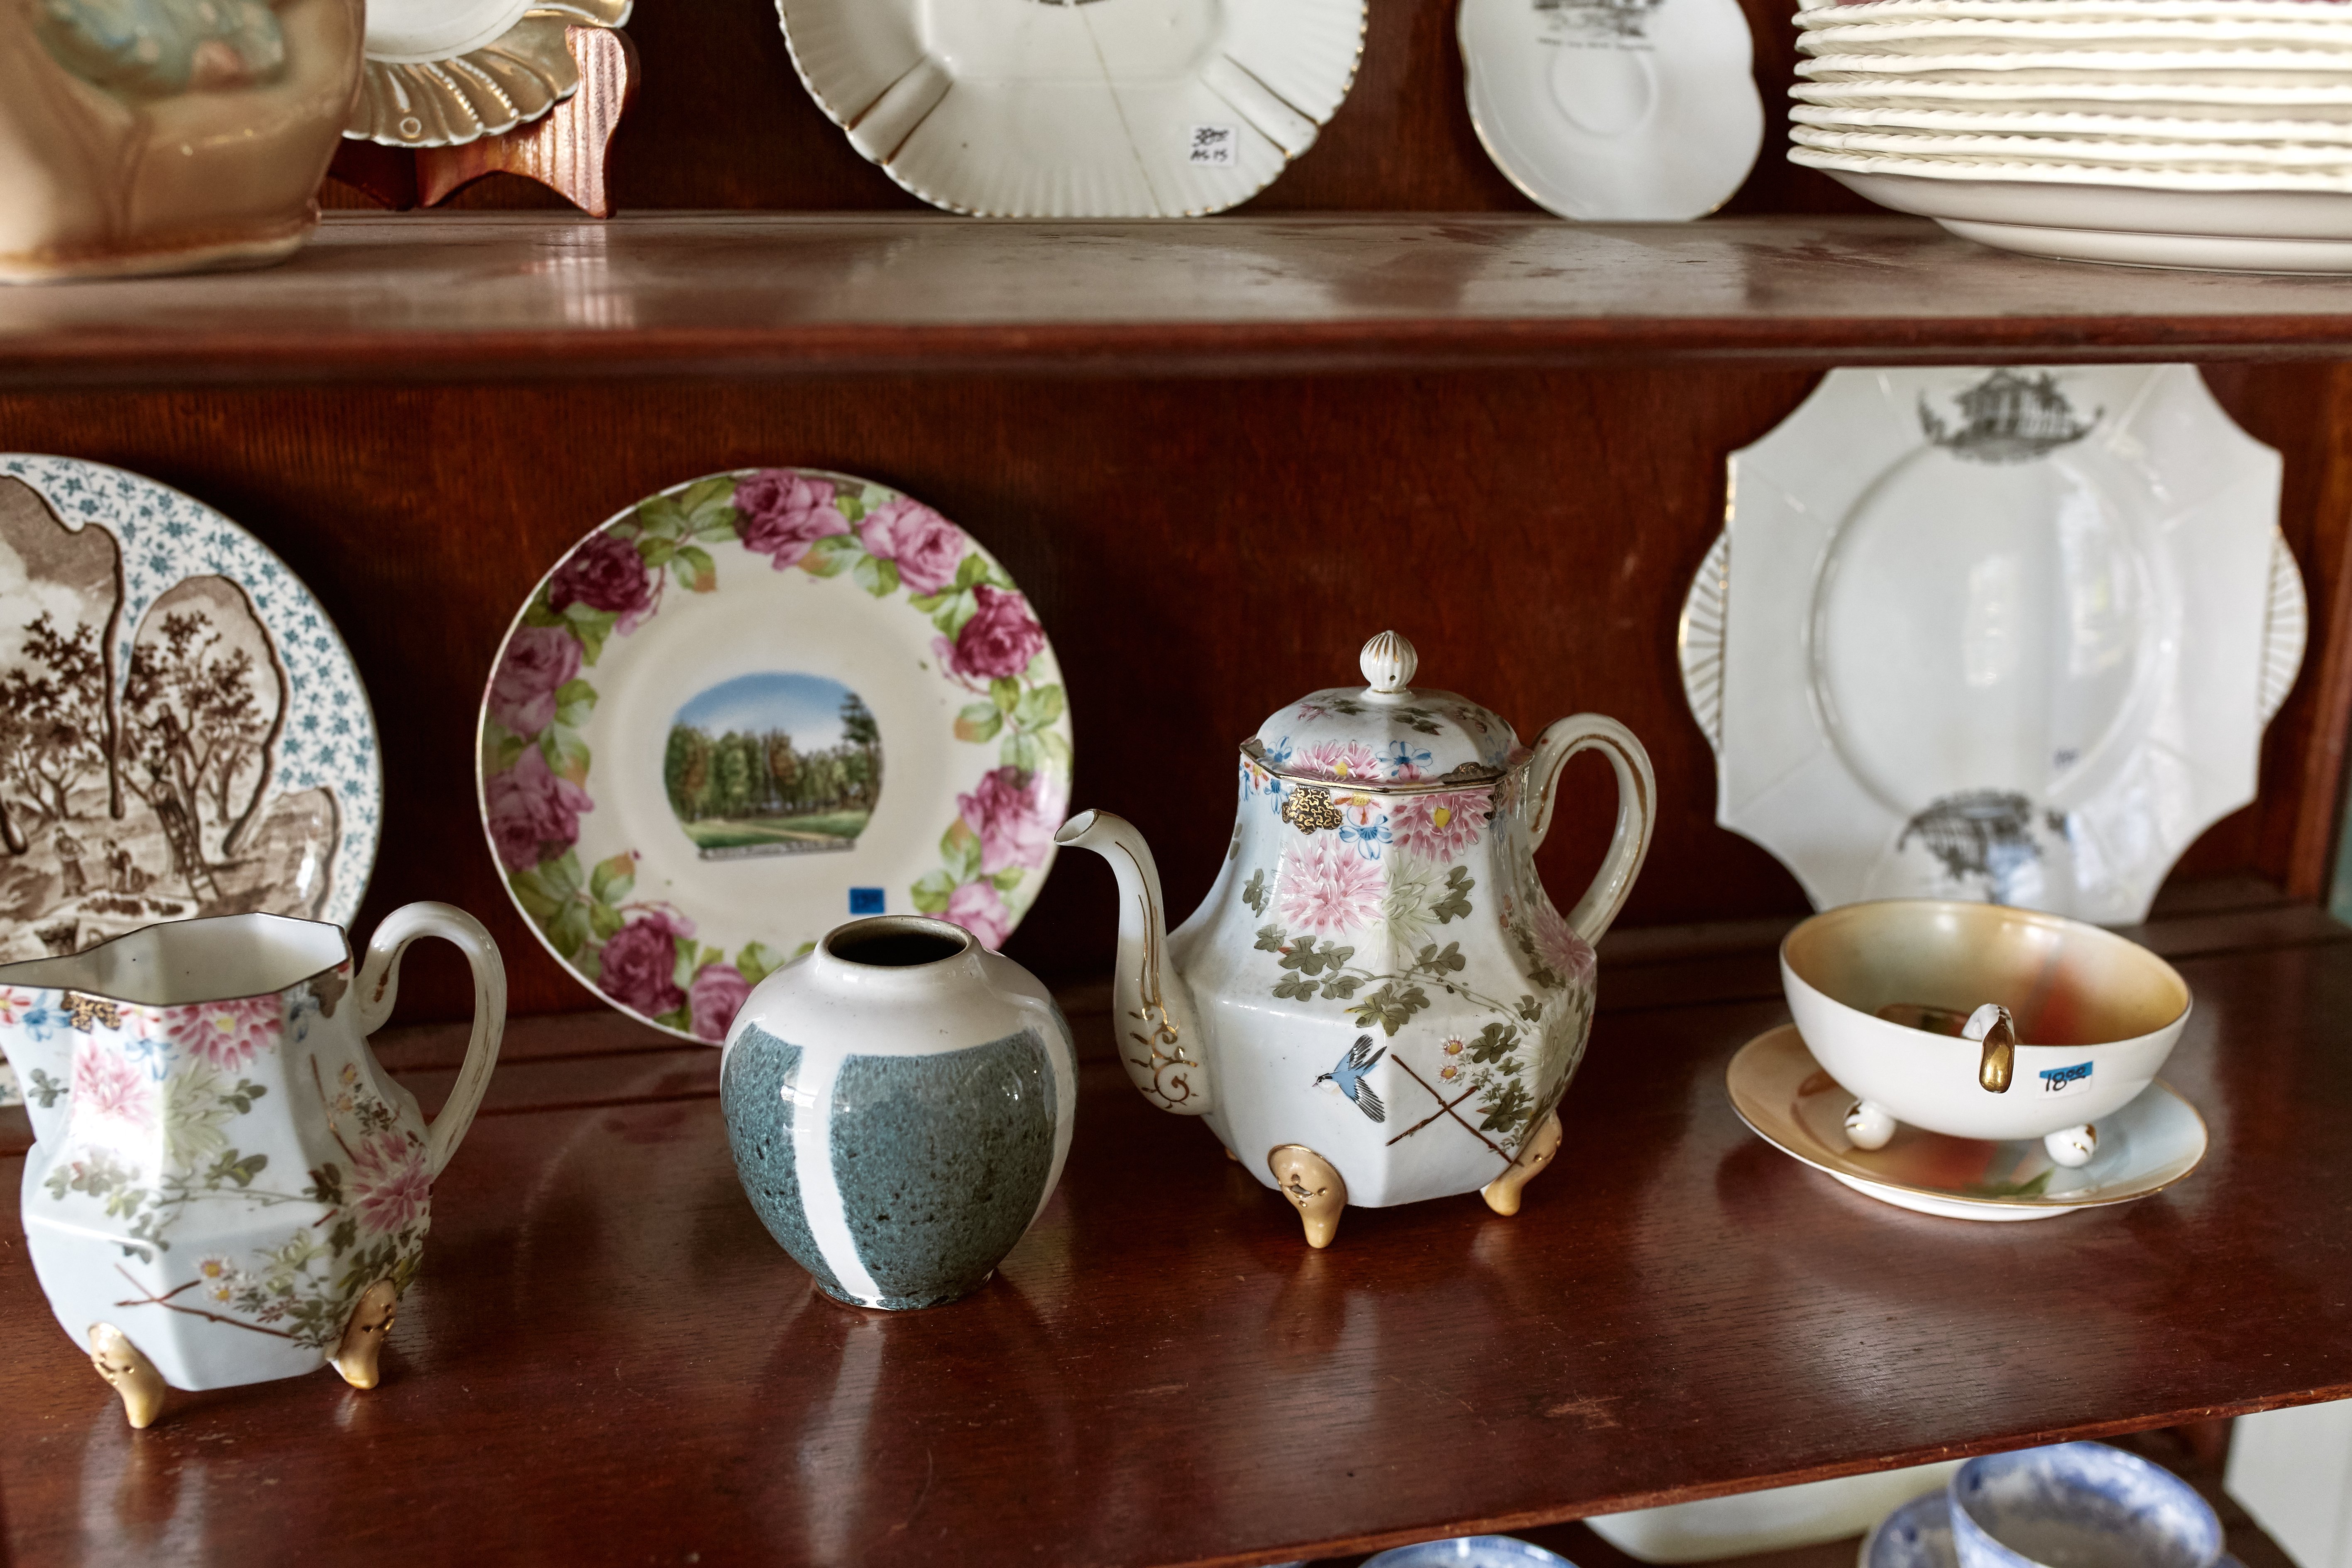 Vintage cabinet with decorative porcelain teapots for sale at a store. | Photo: Shtterstock